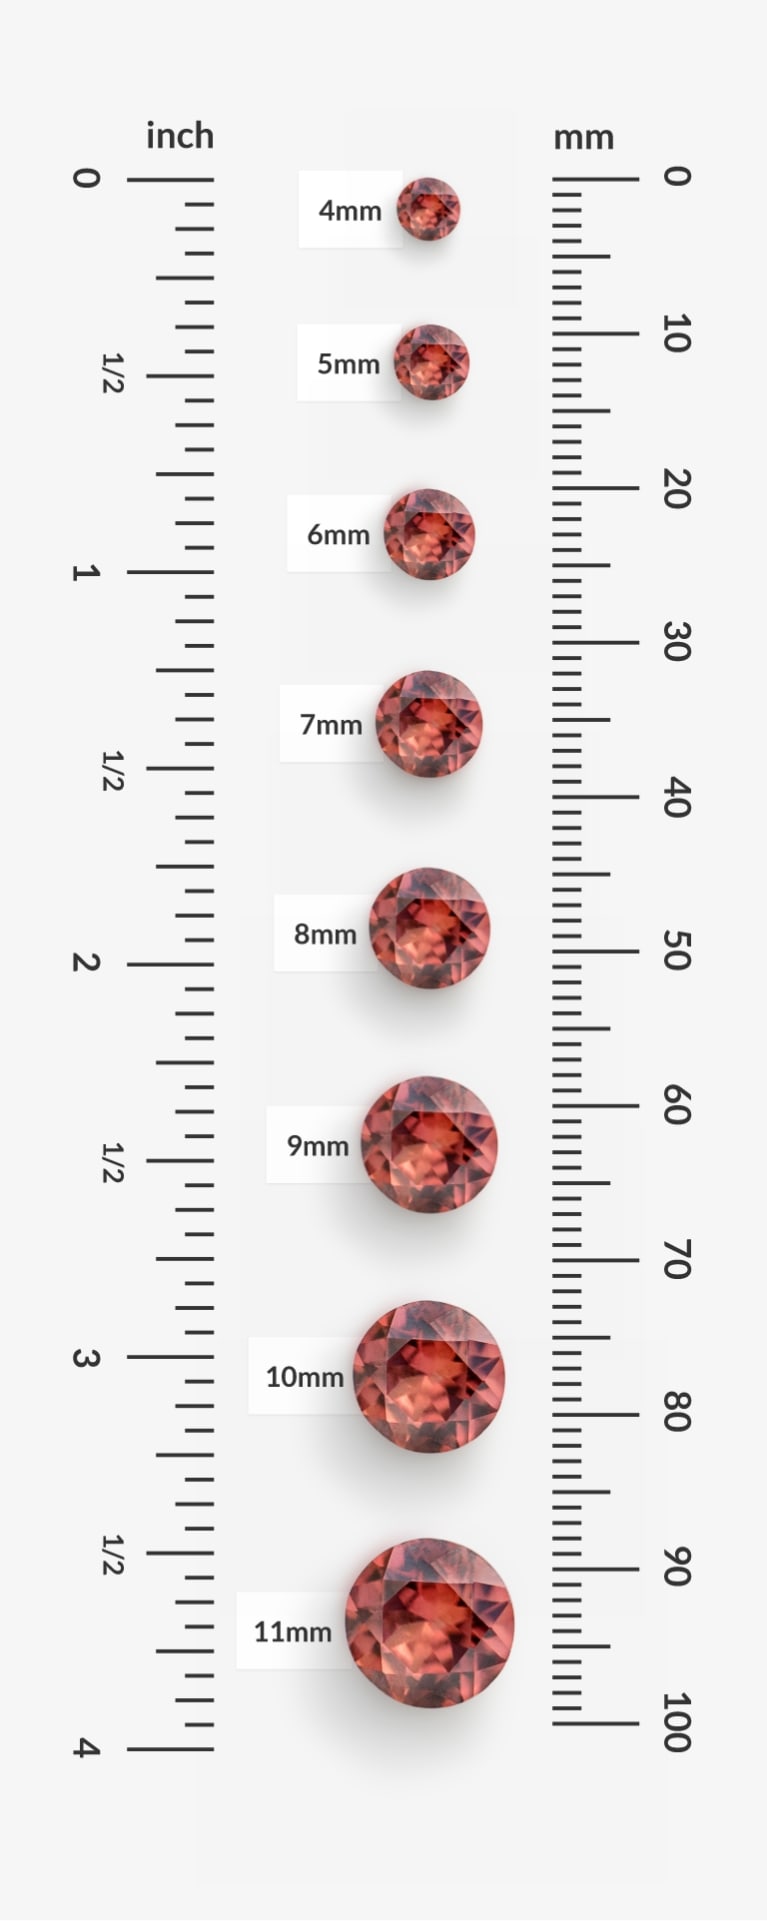 Millimeter Gemstone Comparison Infographic